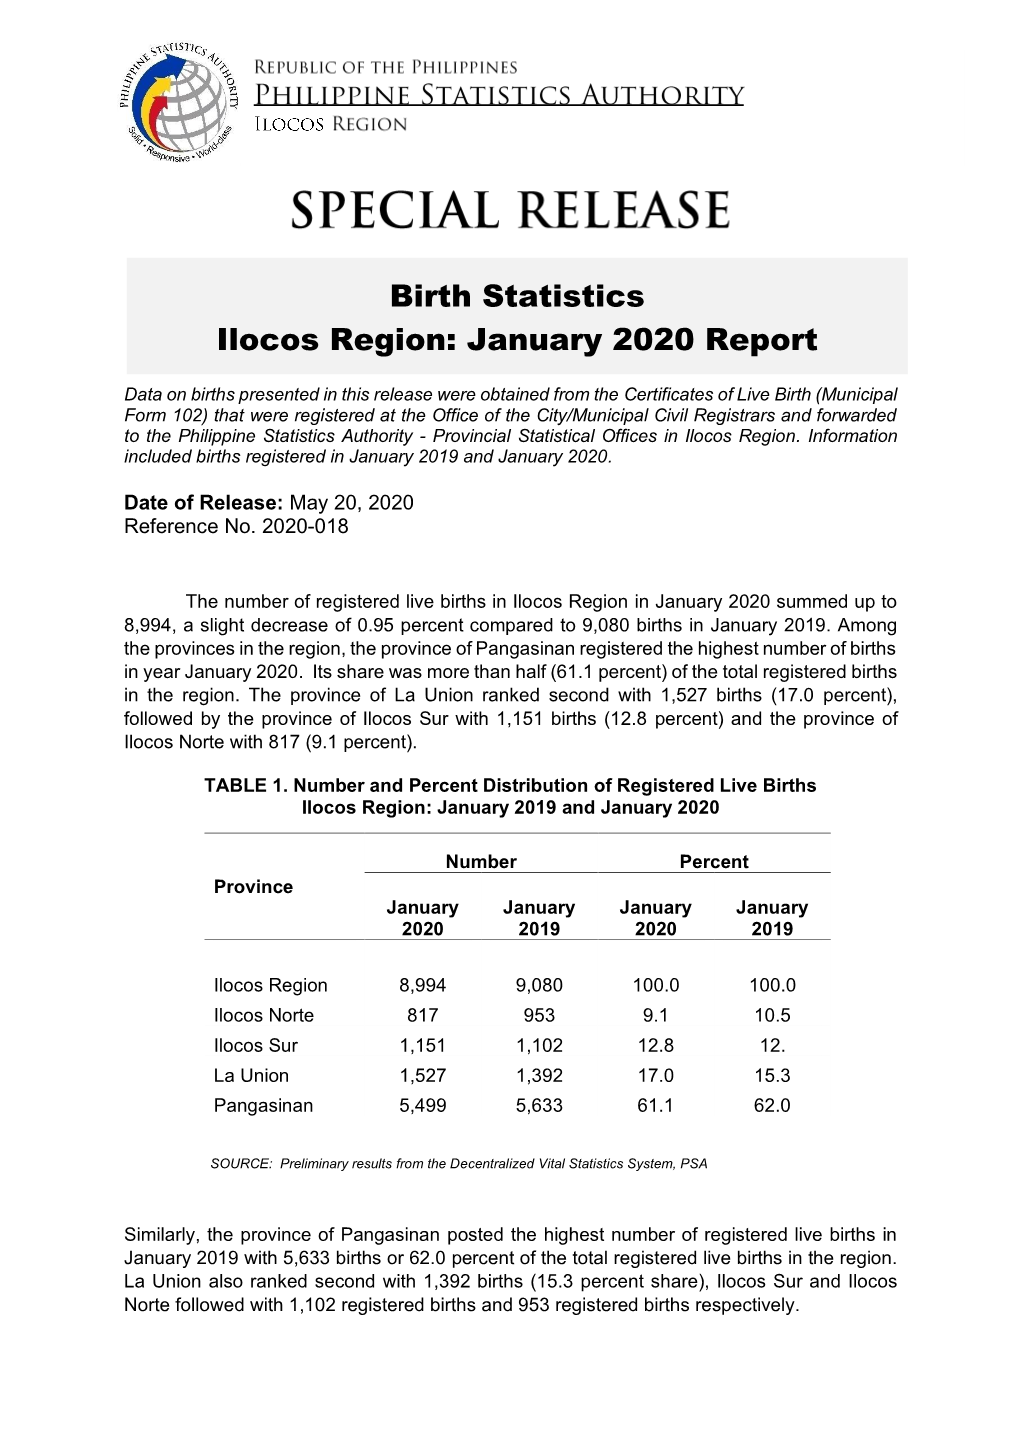 Birth Statistics Ilocos Region: January 2020 Report